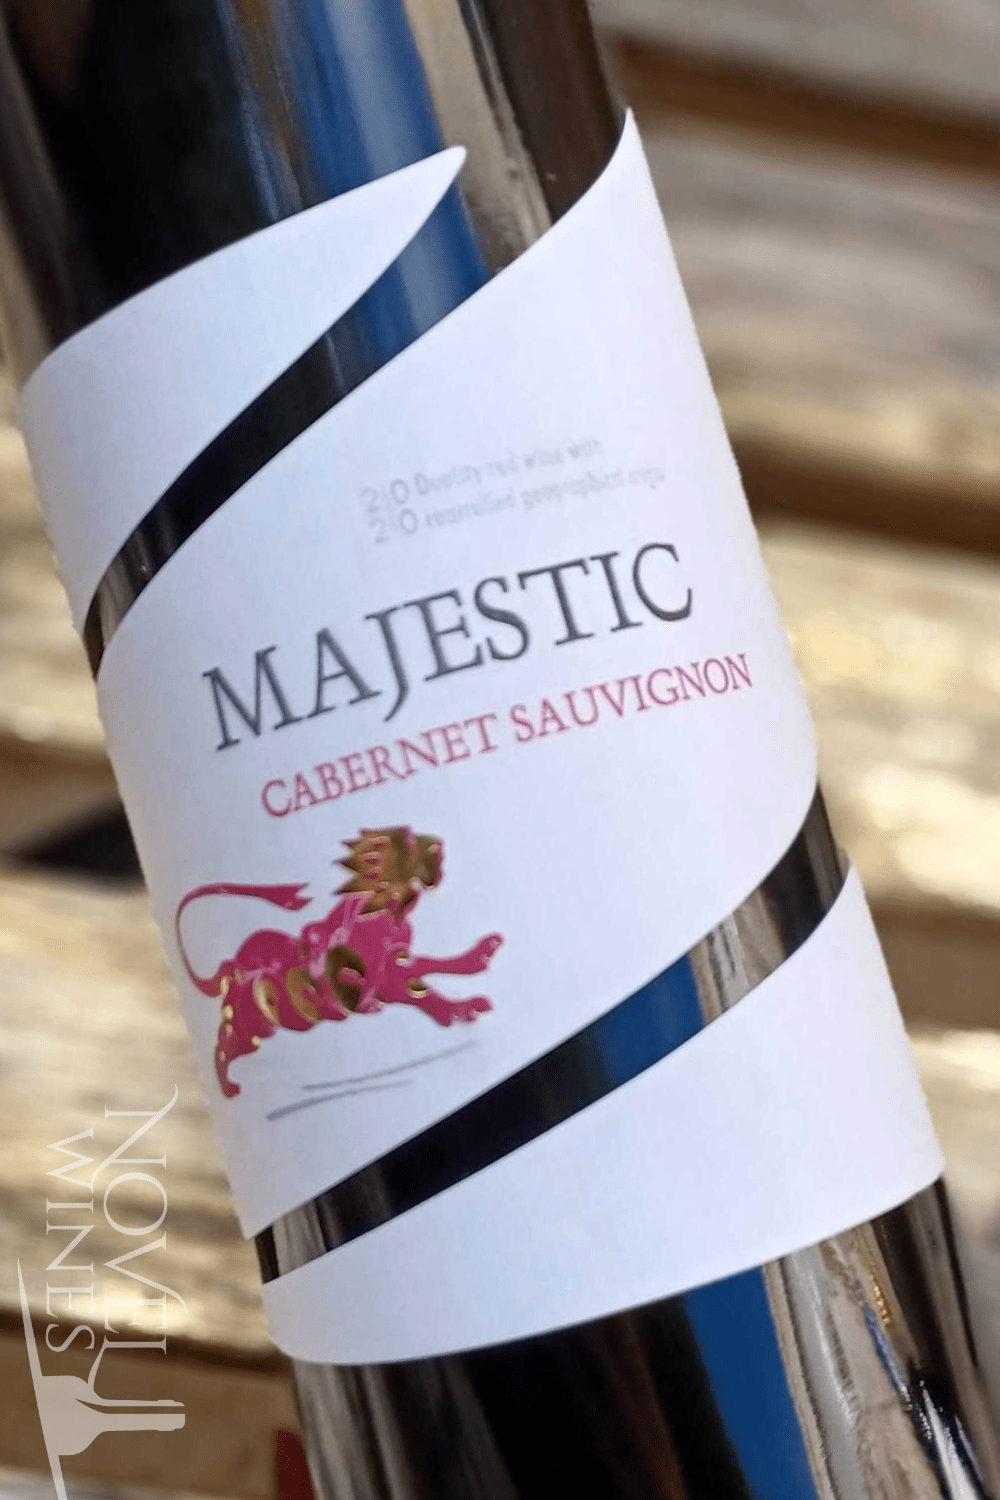 Imako Vino Red Wine Imako Vino Majestic Cabernet Sauvignon 2022, Republic of North Macedonia